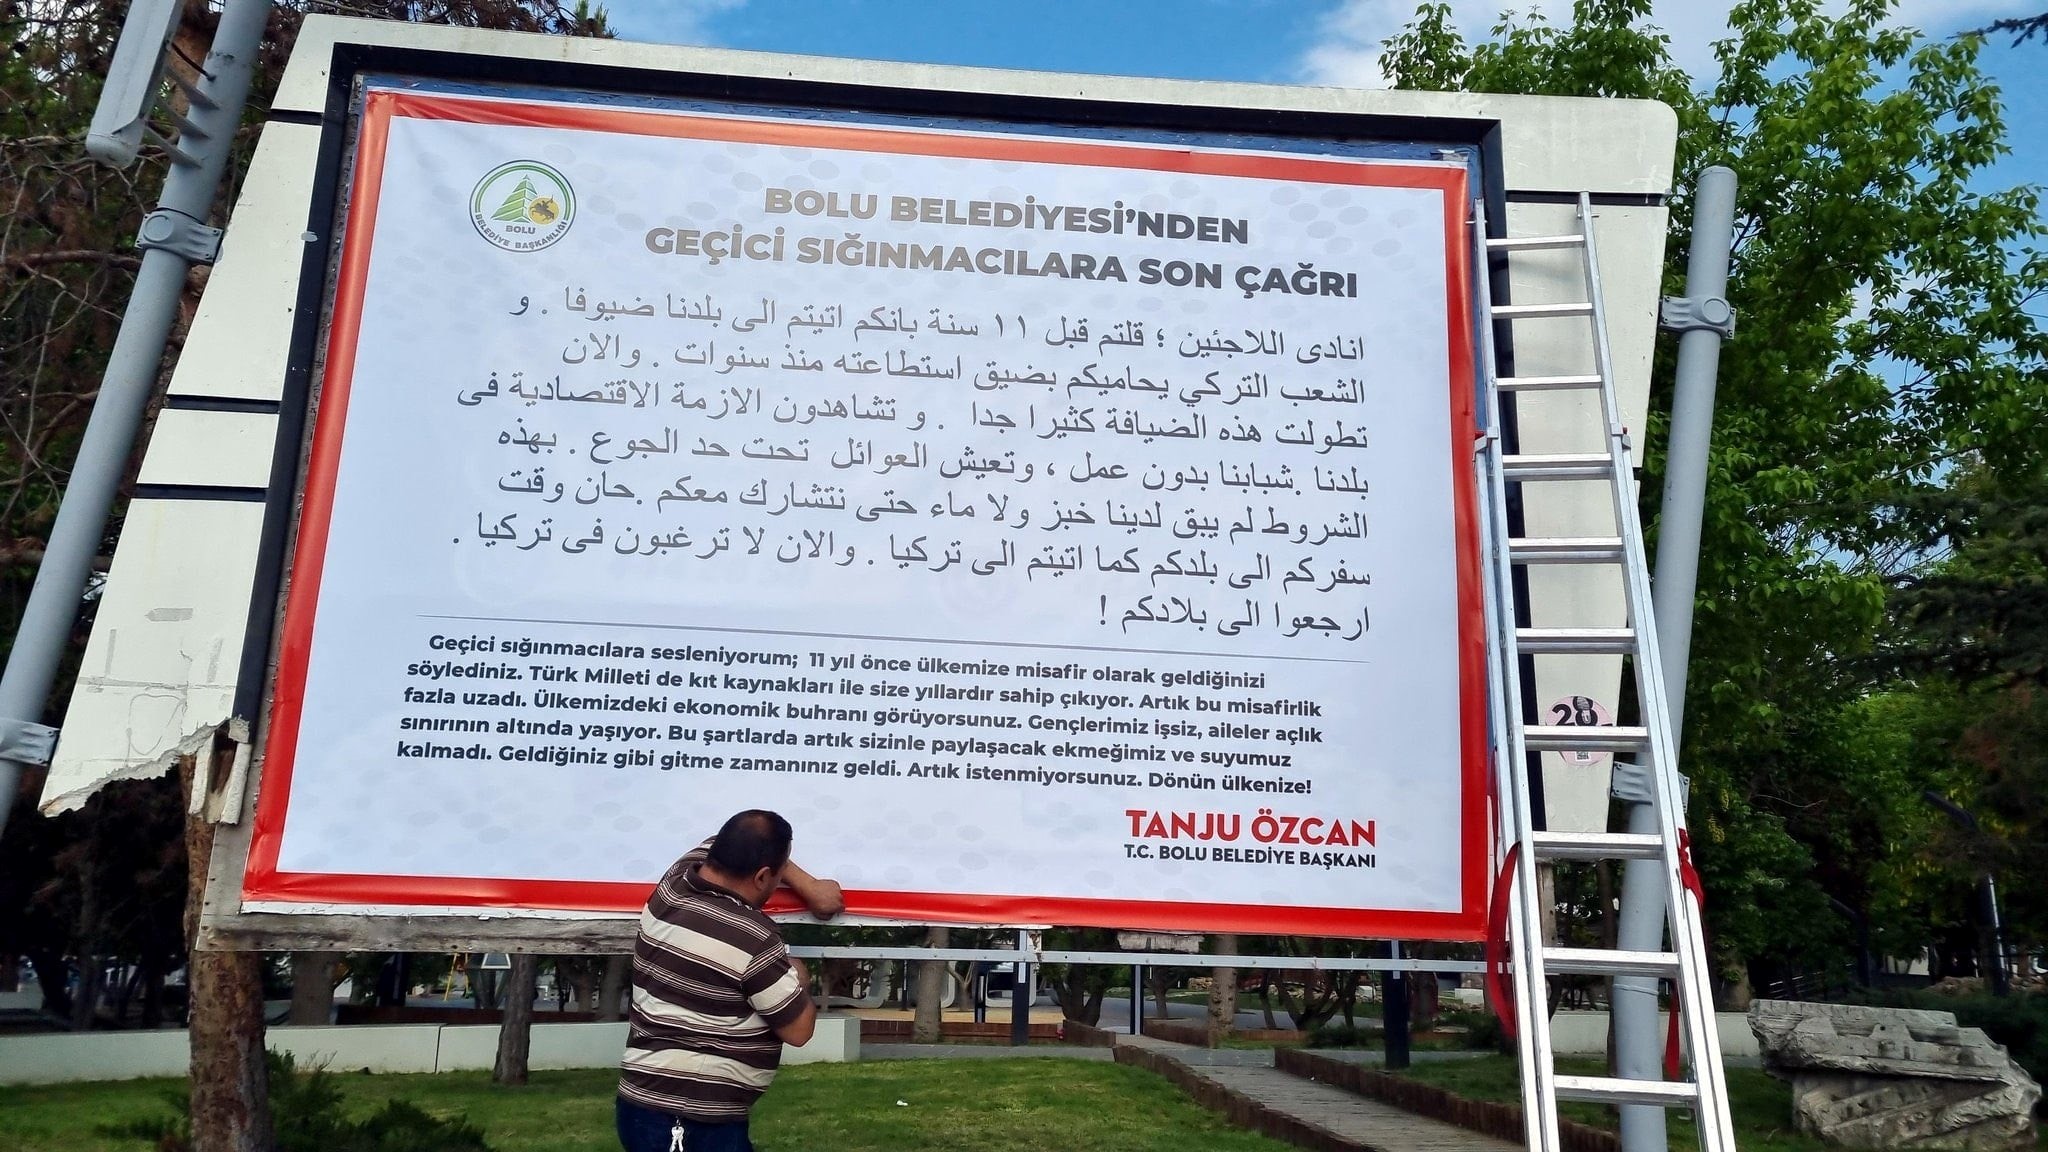 CHP Mayor Tanju Ozcan's anti-refugee billboards in the northwestern province of Bolu (source: Facebook, Haber Ay)